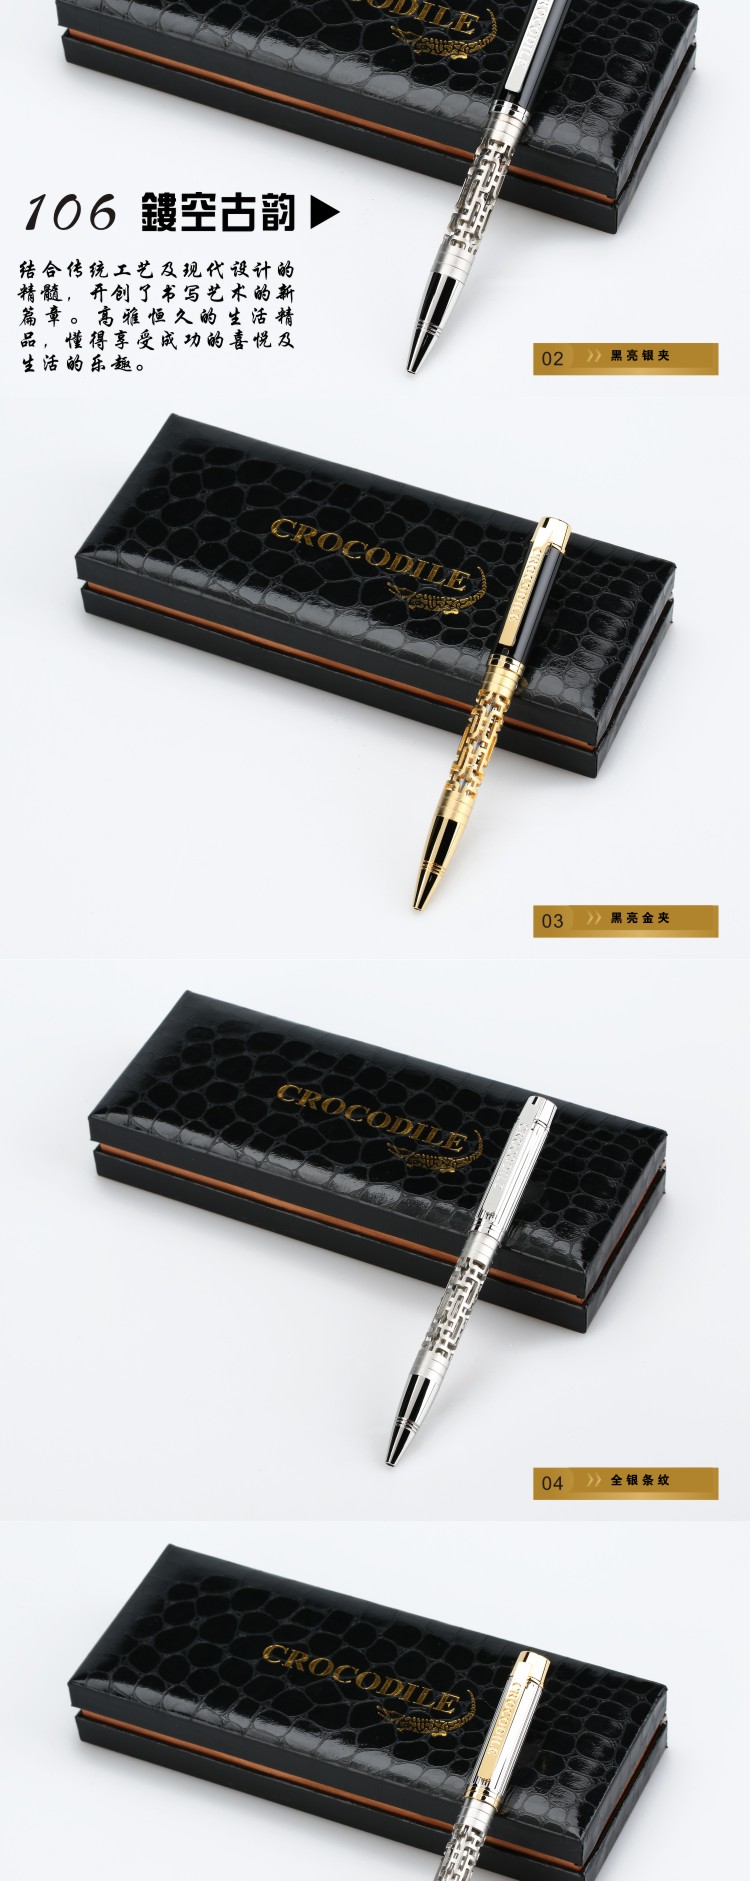 Crocodile 106 hollow rotary metal ballpoint pen pen pen pen high-end business gifts3